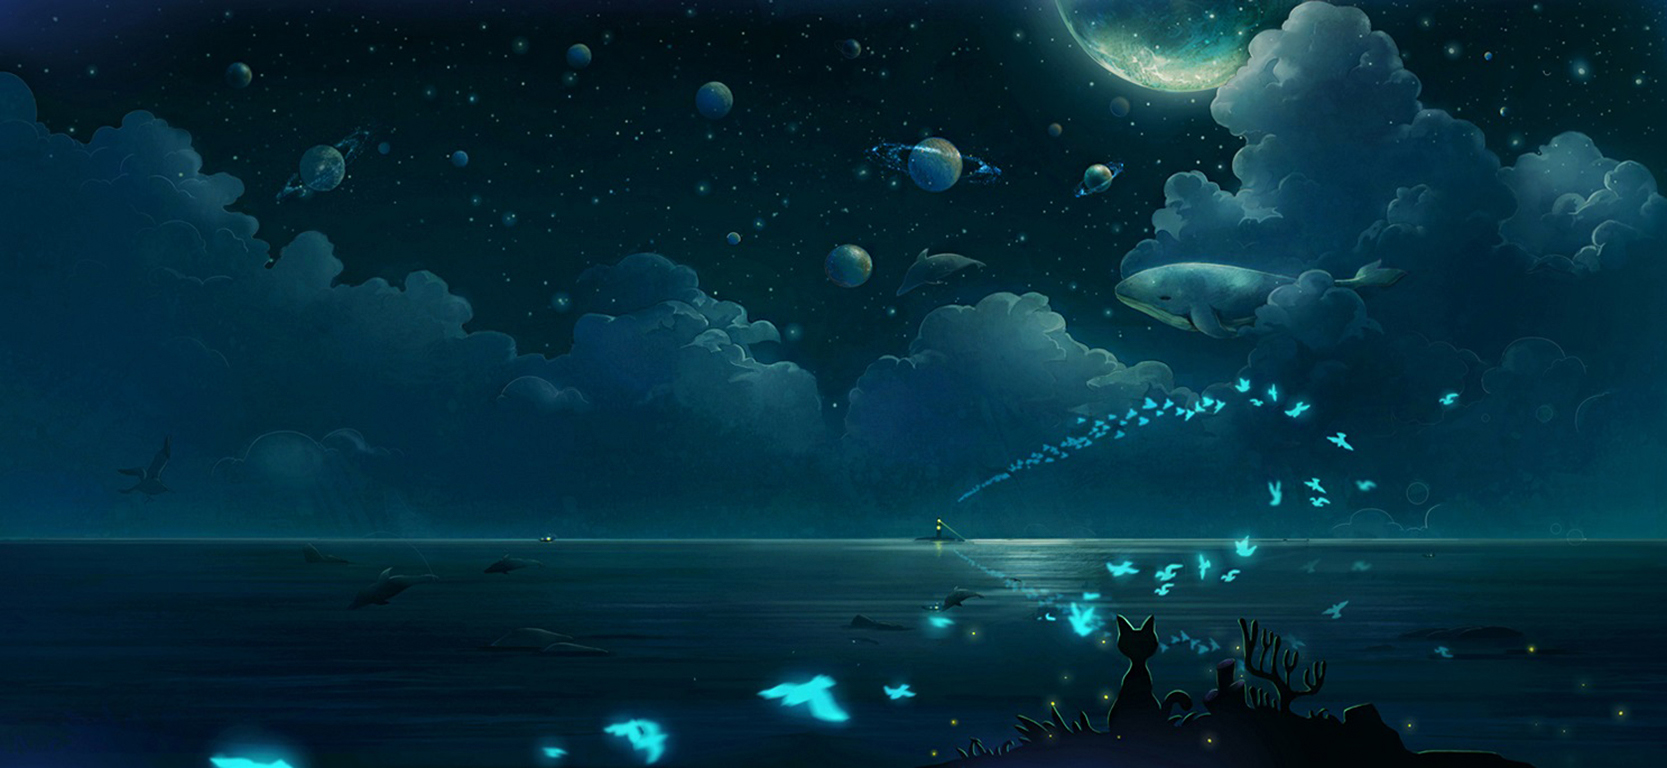 whale, fish, planet, night, moon, anime, bird, cat, cloud, landscape, ocean, sky, star